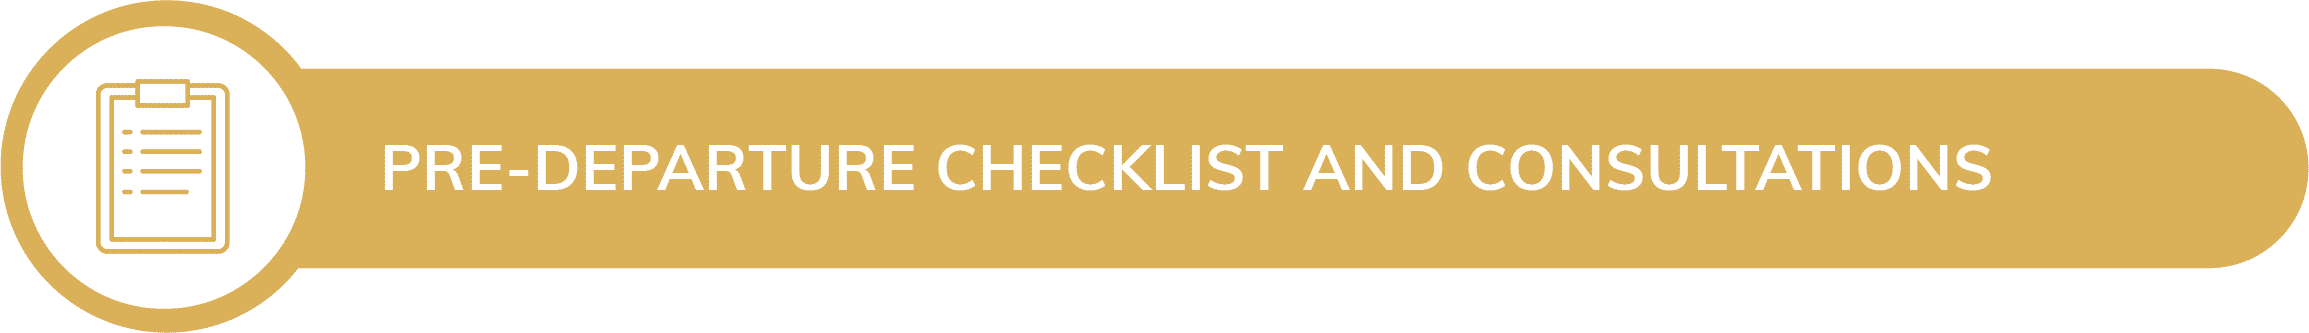 Pre-departure checklist and consultations